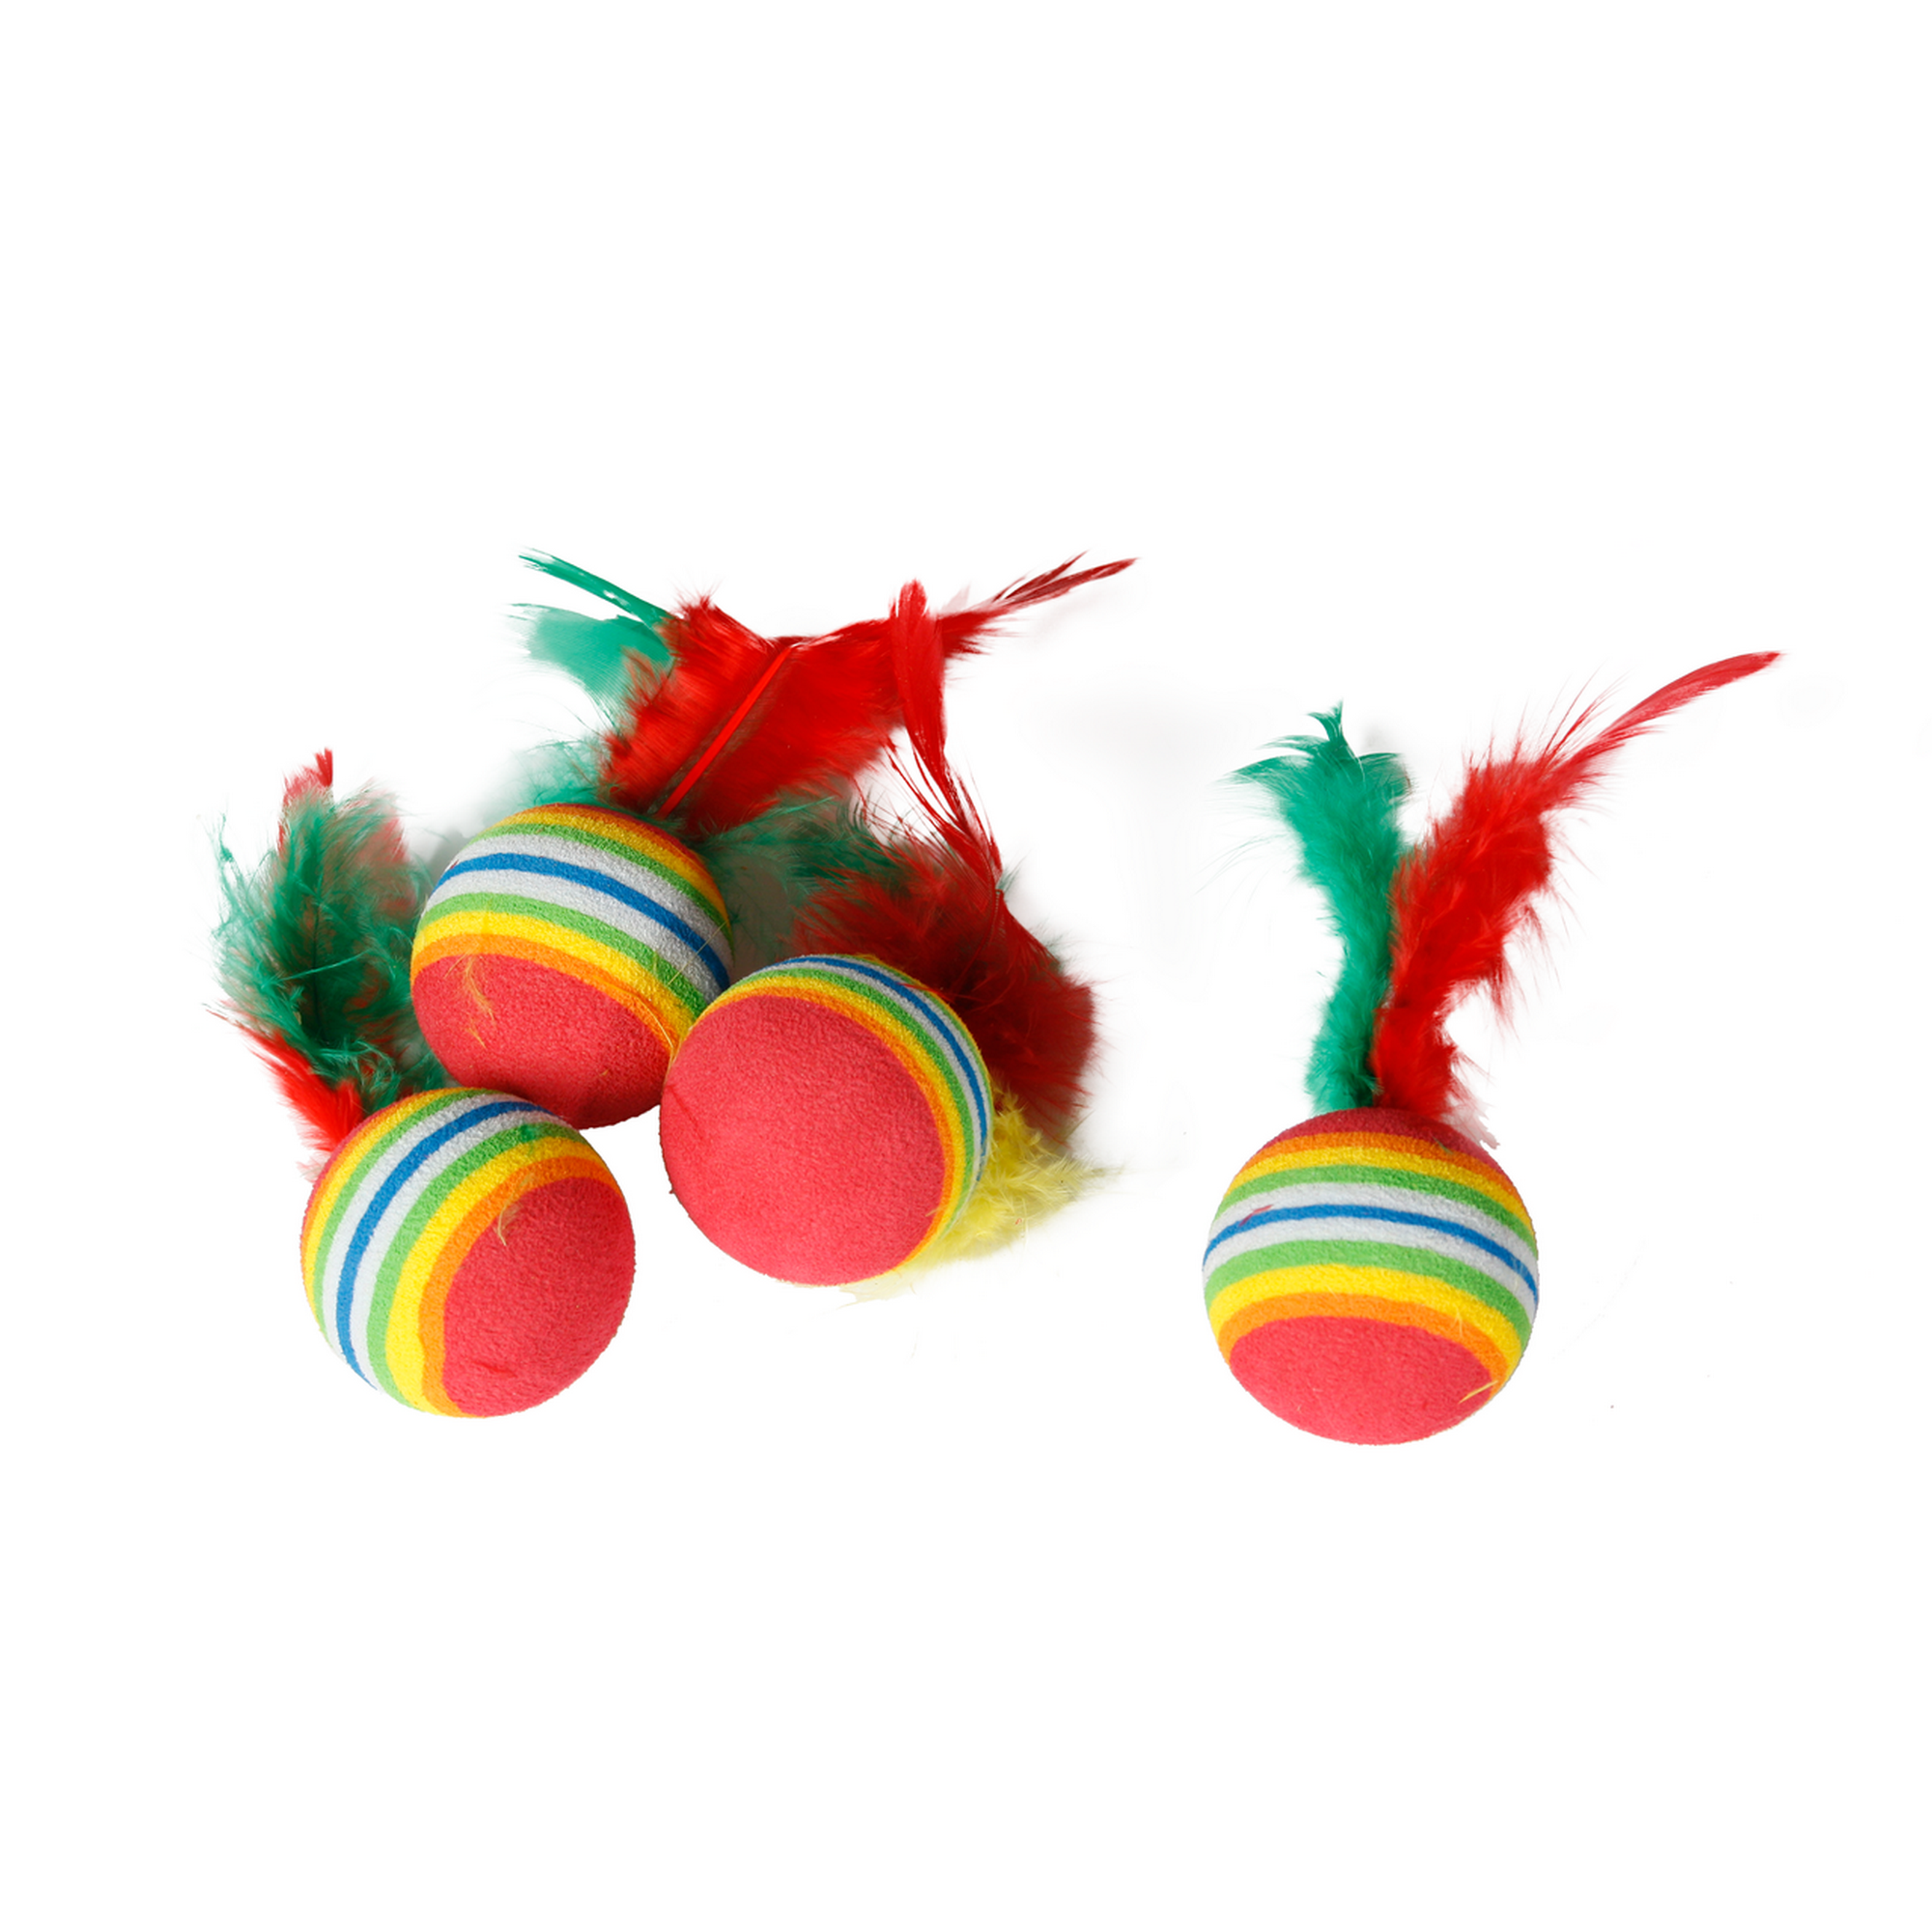 Katzenspielzeug 4 Regenbogenbälle mit Feder, mehrfarbig Ø 3 cm + product picture